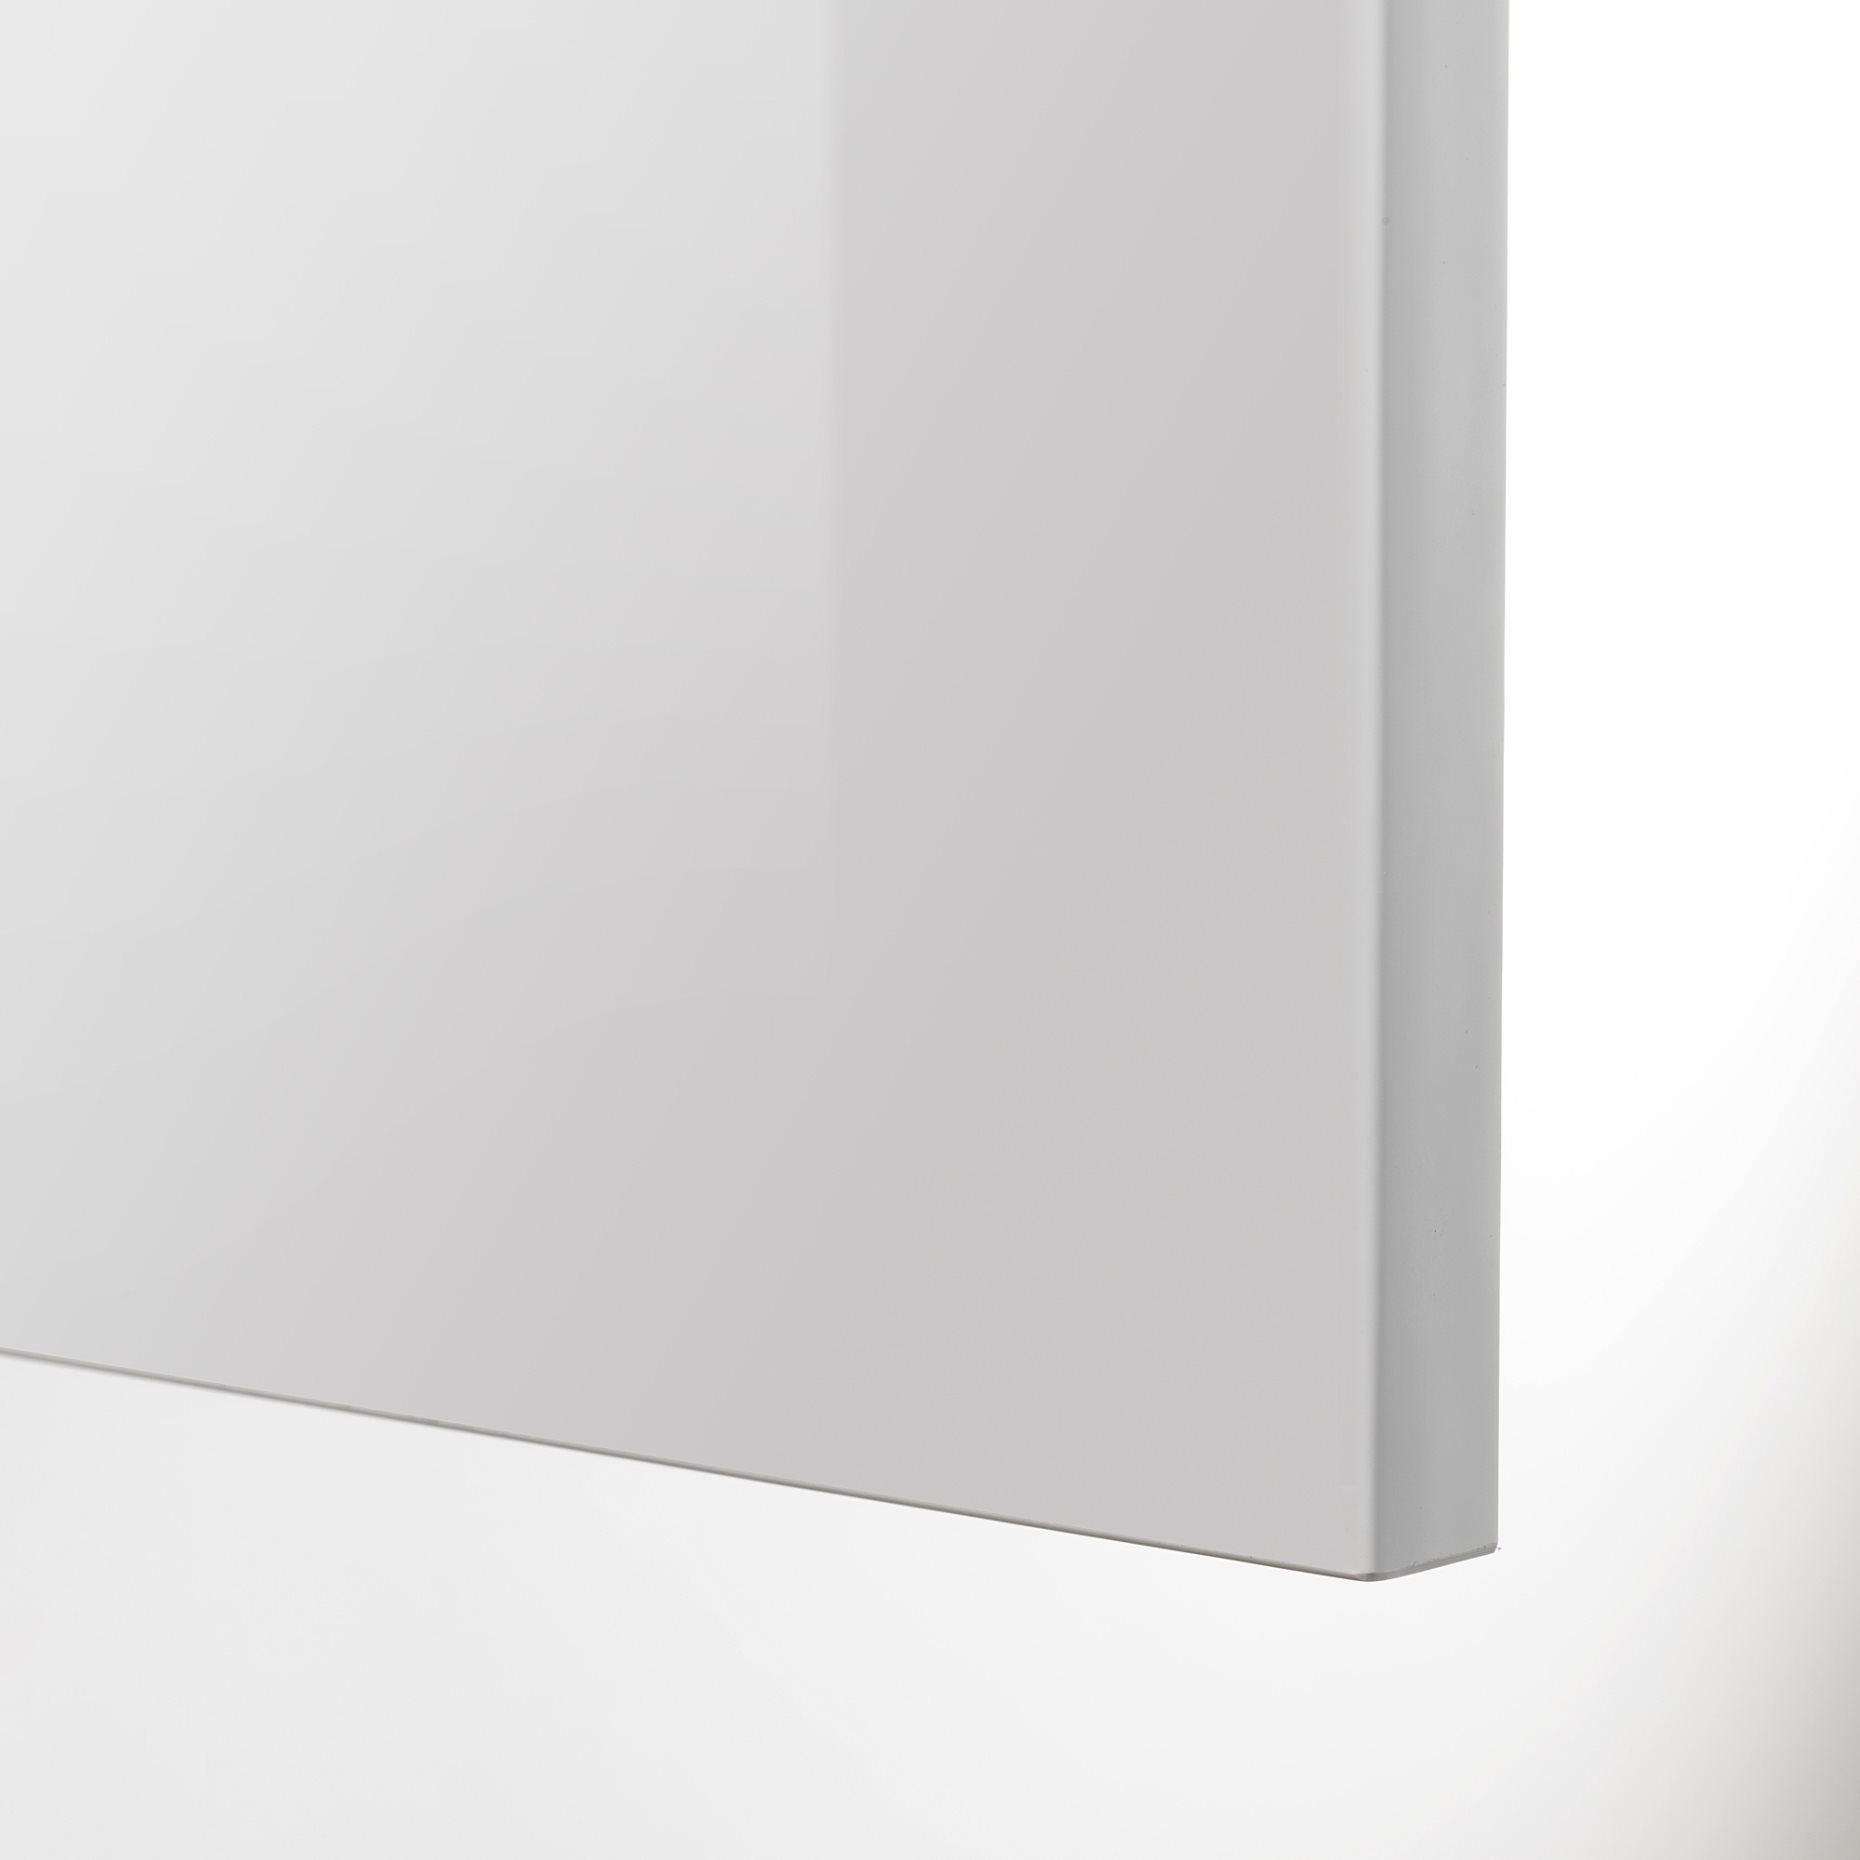 METOD, ντουλάπι βάσης με συρμάτινα καλάθια, 60x60 cm, 094.701.19